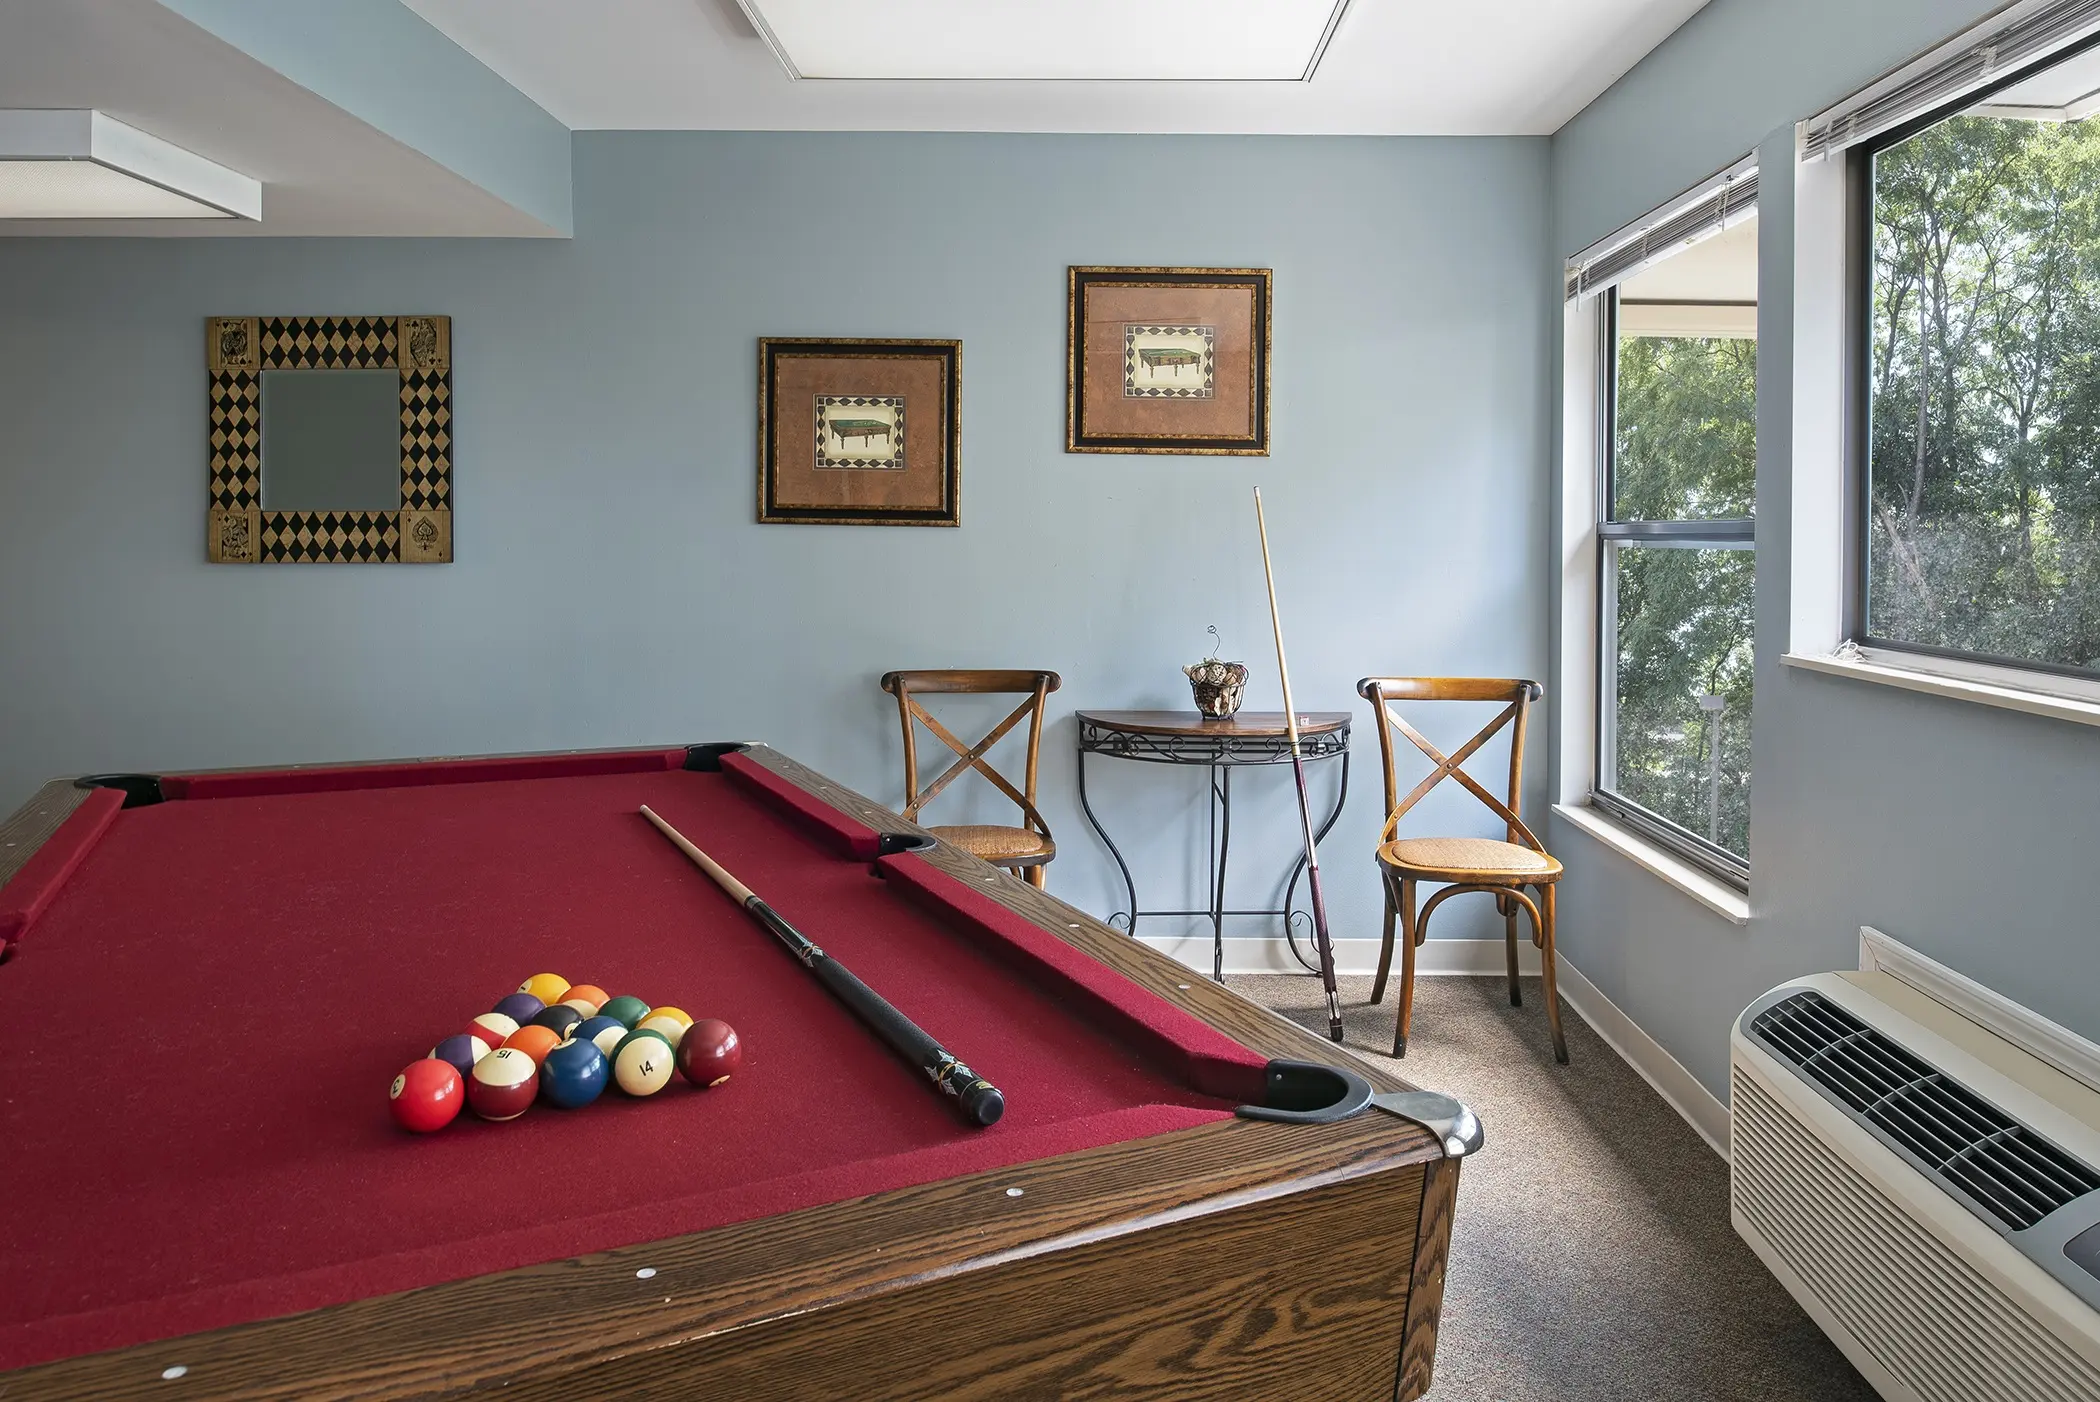 Pool table / activity area of American House Carpenter, a senior living community in Ypsilanti, Michigan